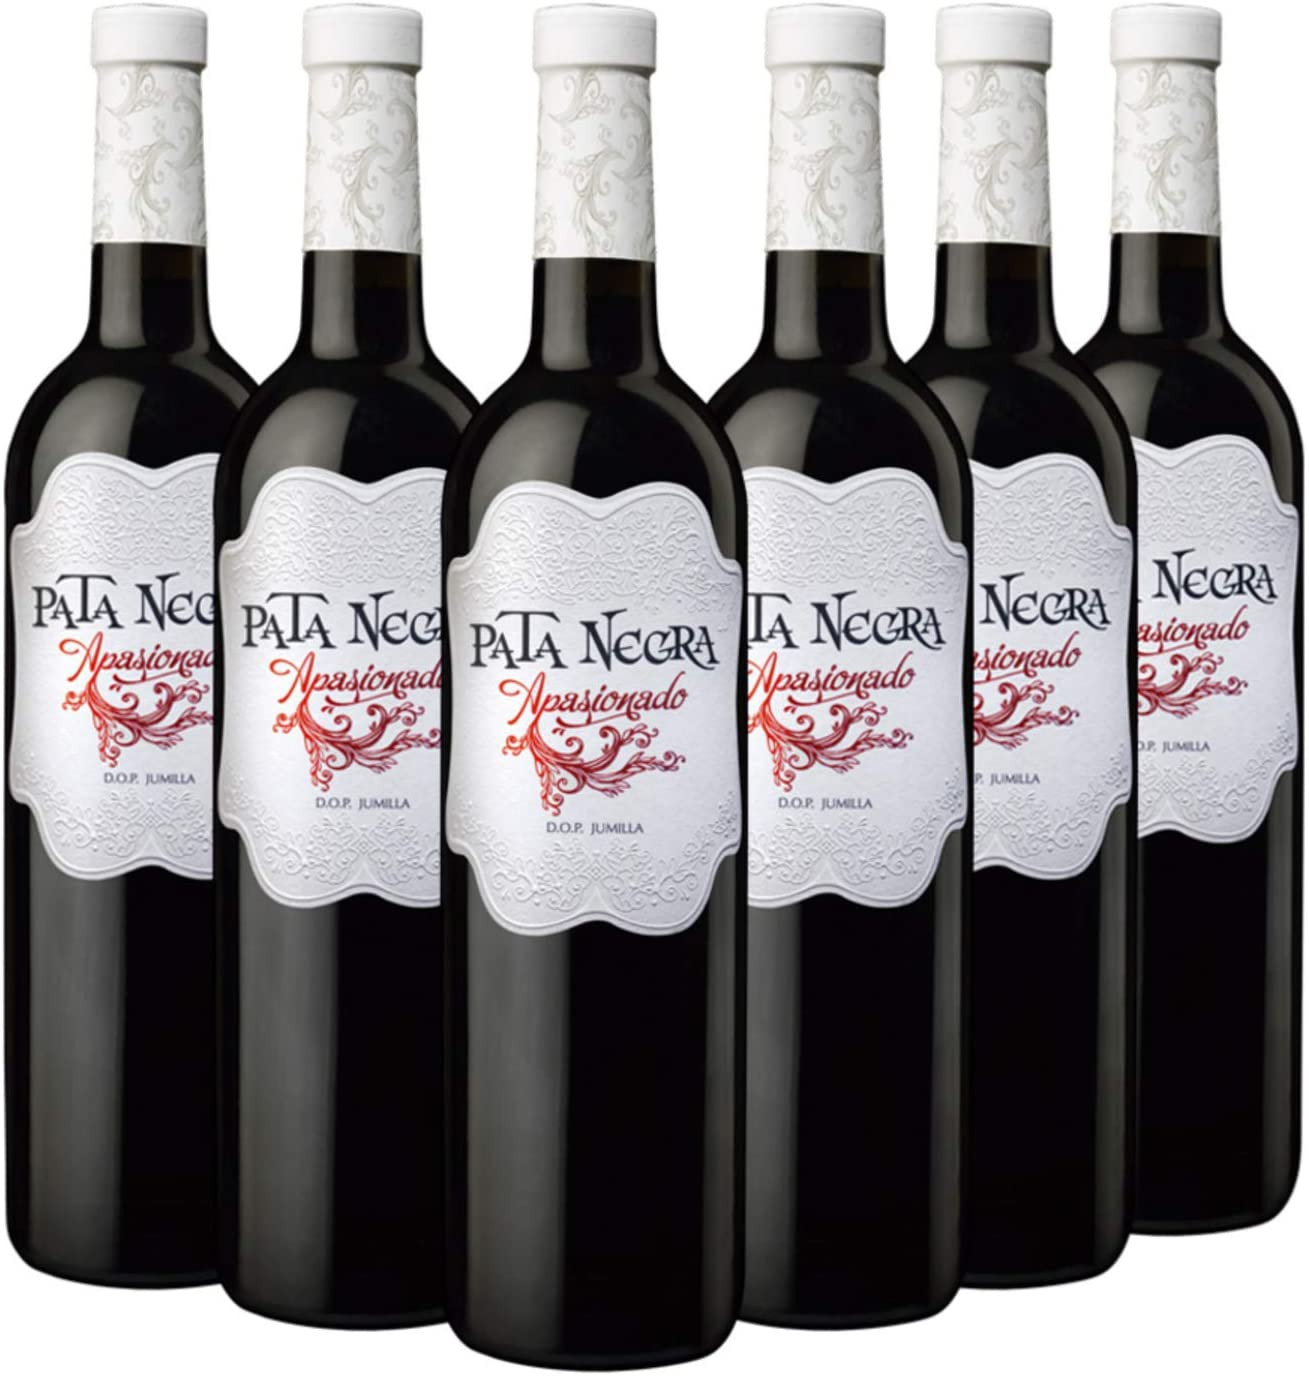 Pack 6 botellas de vino tinto Pata Negra Apasionado D.O Jumilla